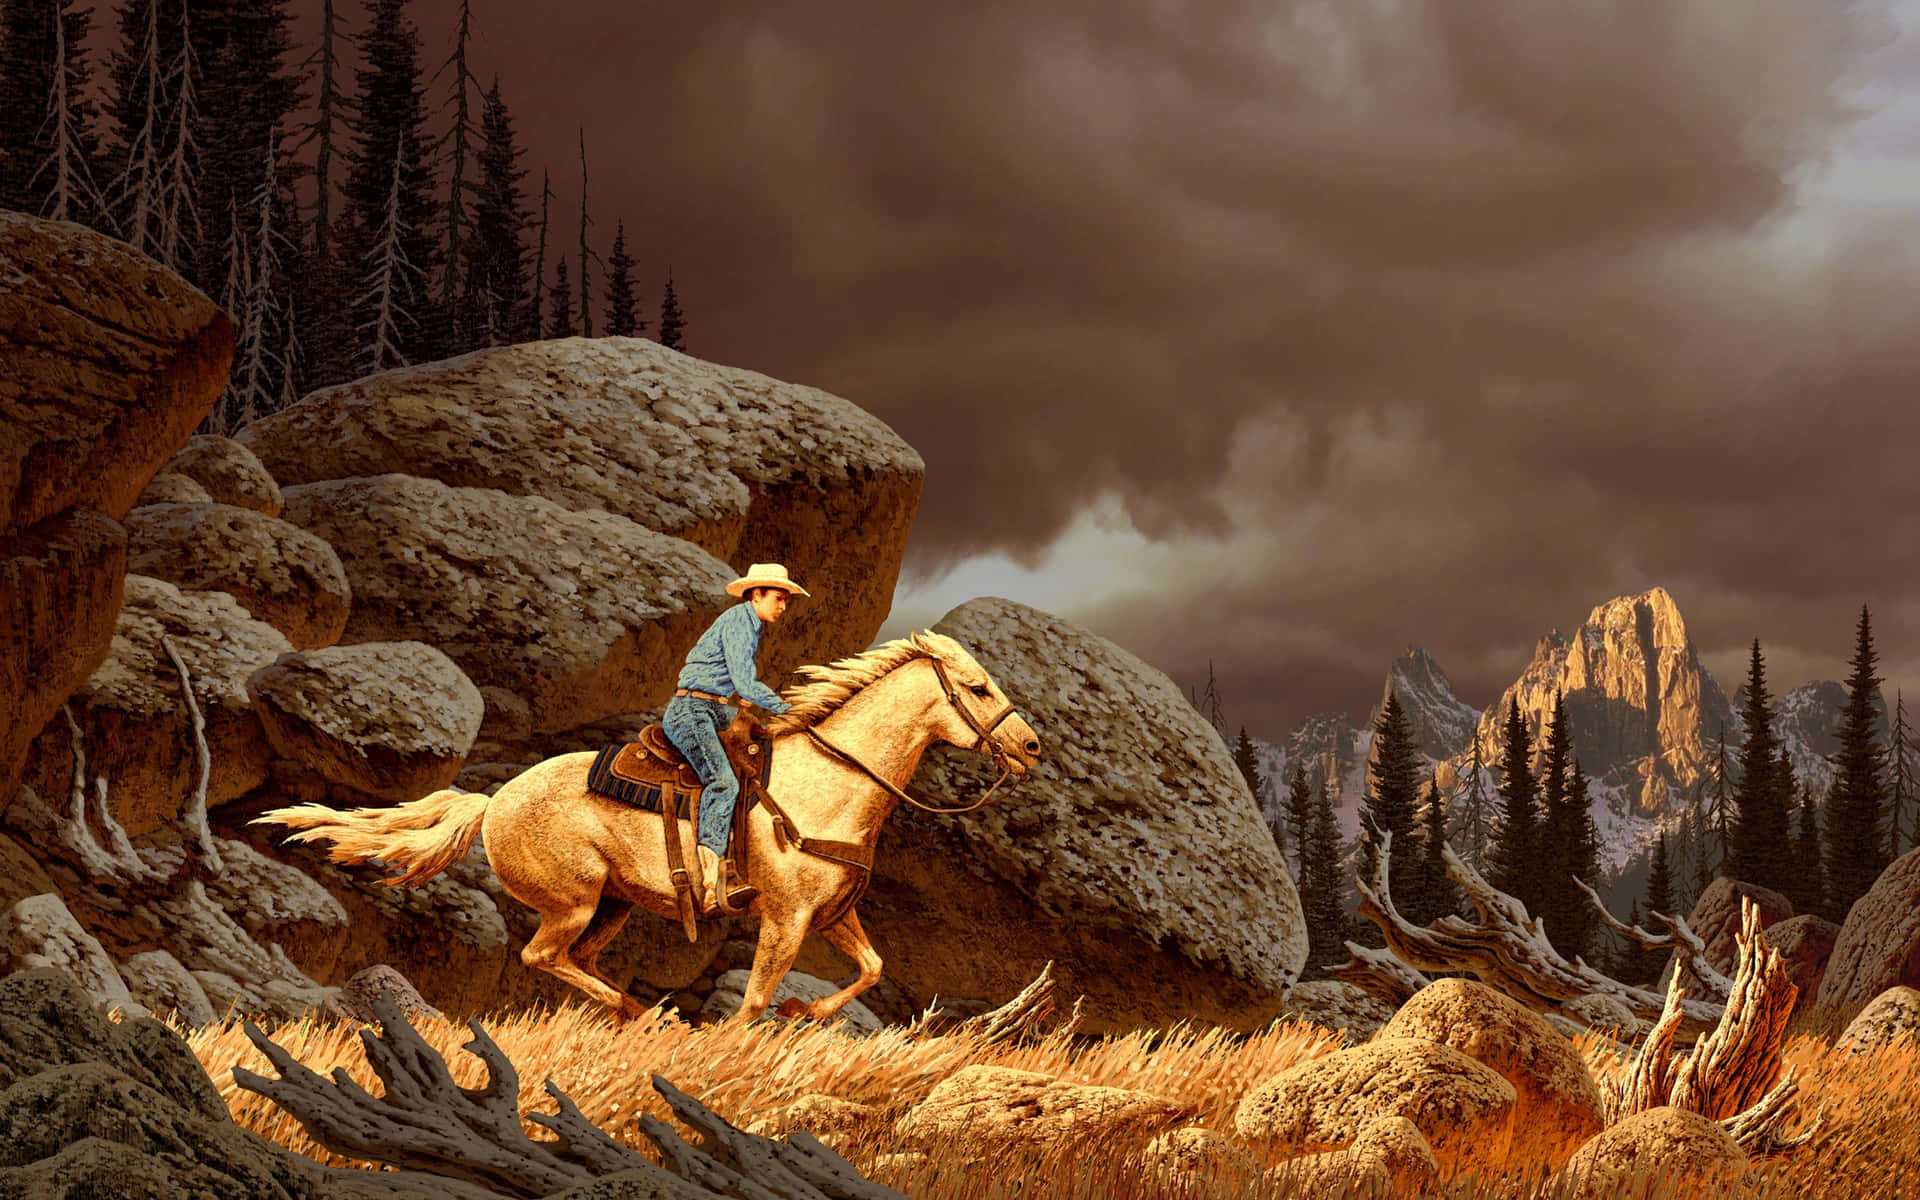 A Cowboy On His Horse Riding Through a Dusty Desert